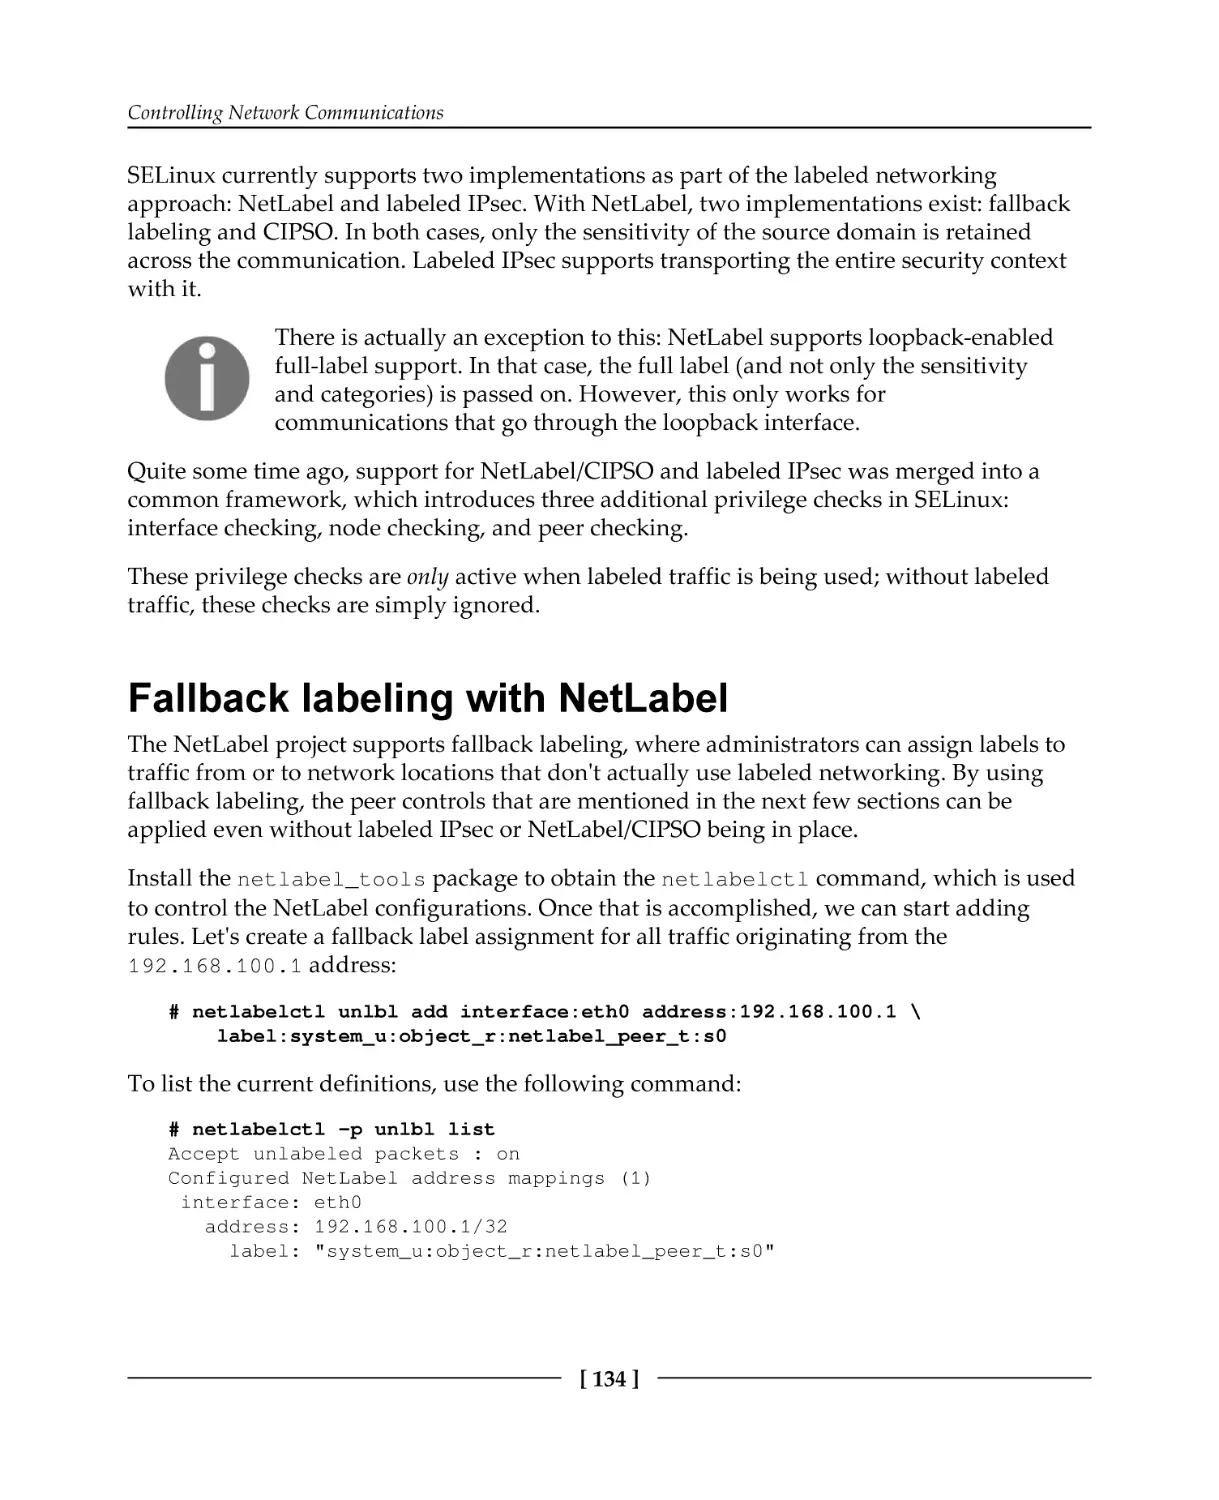 Fallback labeling with NetLabel